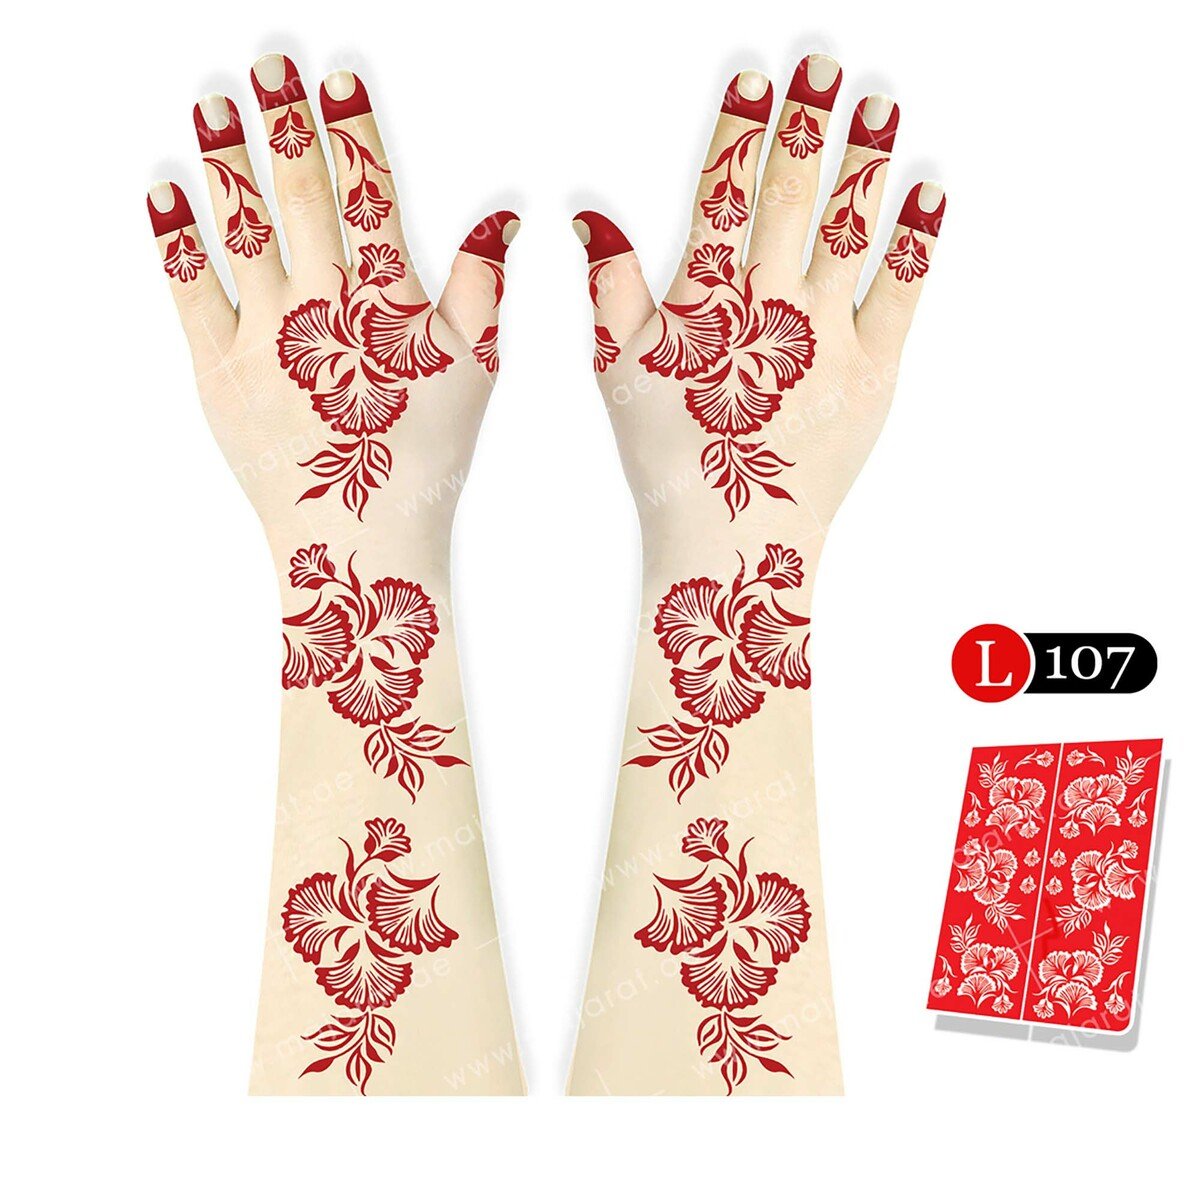 Majarat Henna Design Sticker Large L107 18x25cm